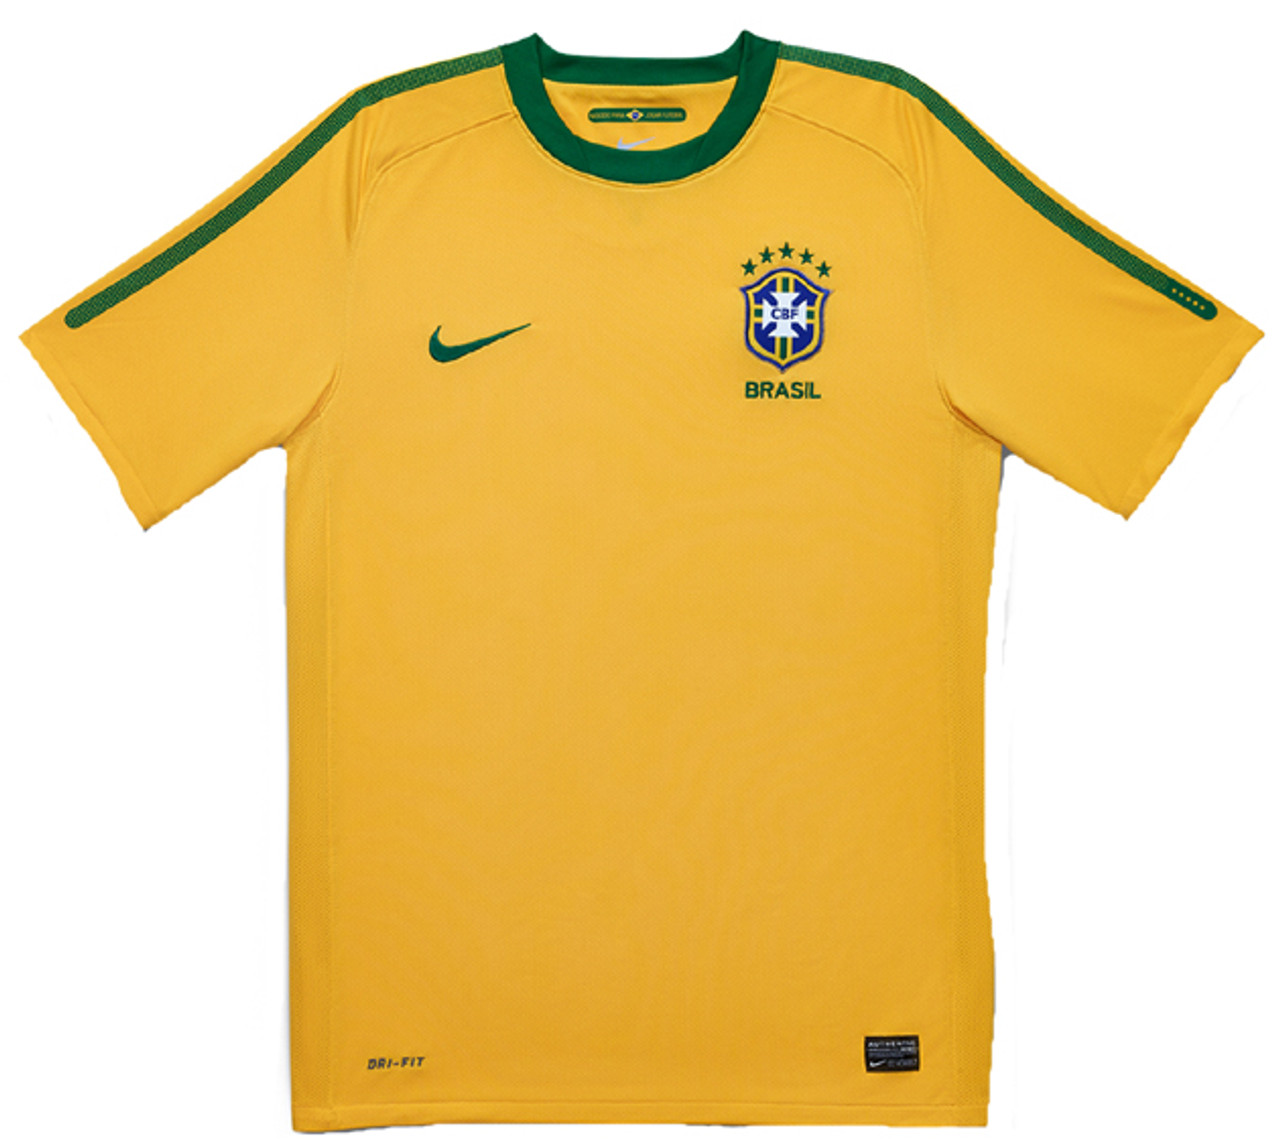 2010 brazil jersey